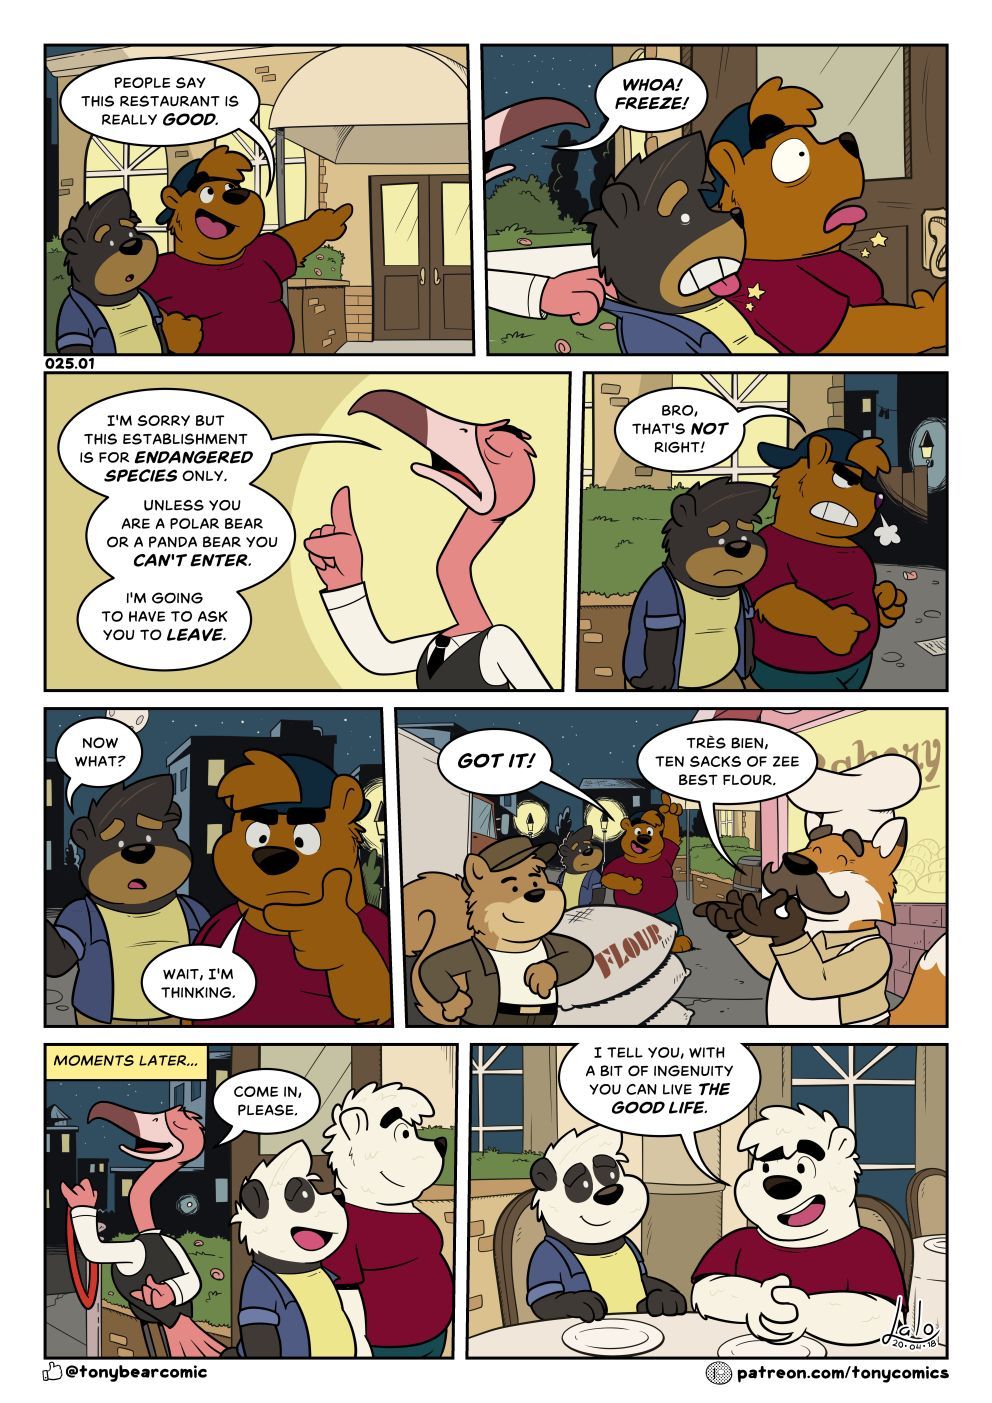 [FurryDude88] Tony Comics [On Going] 123